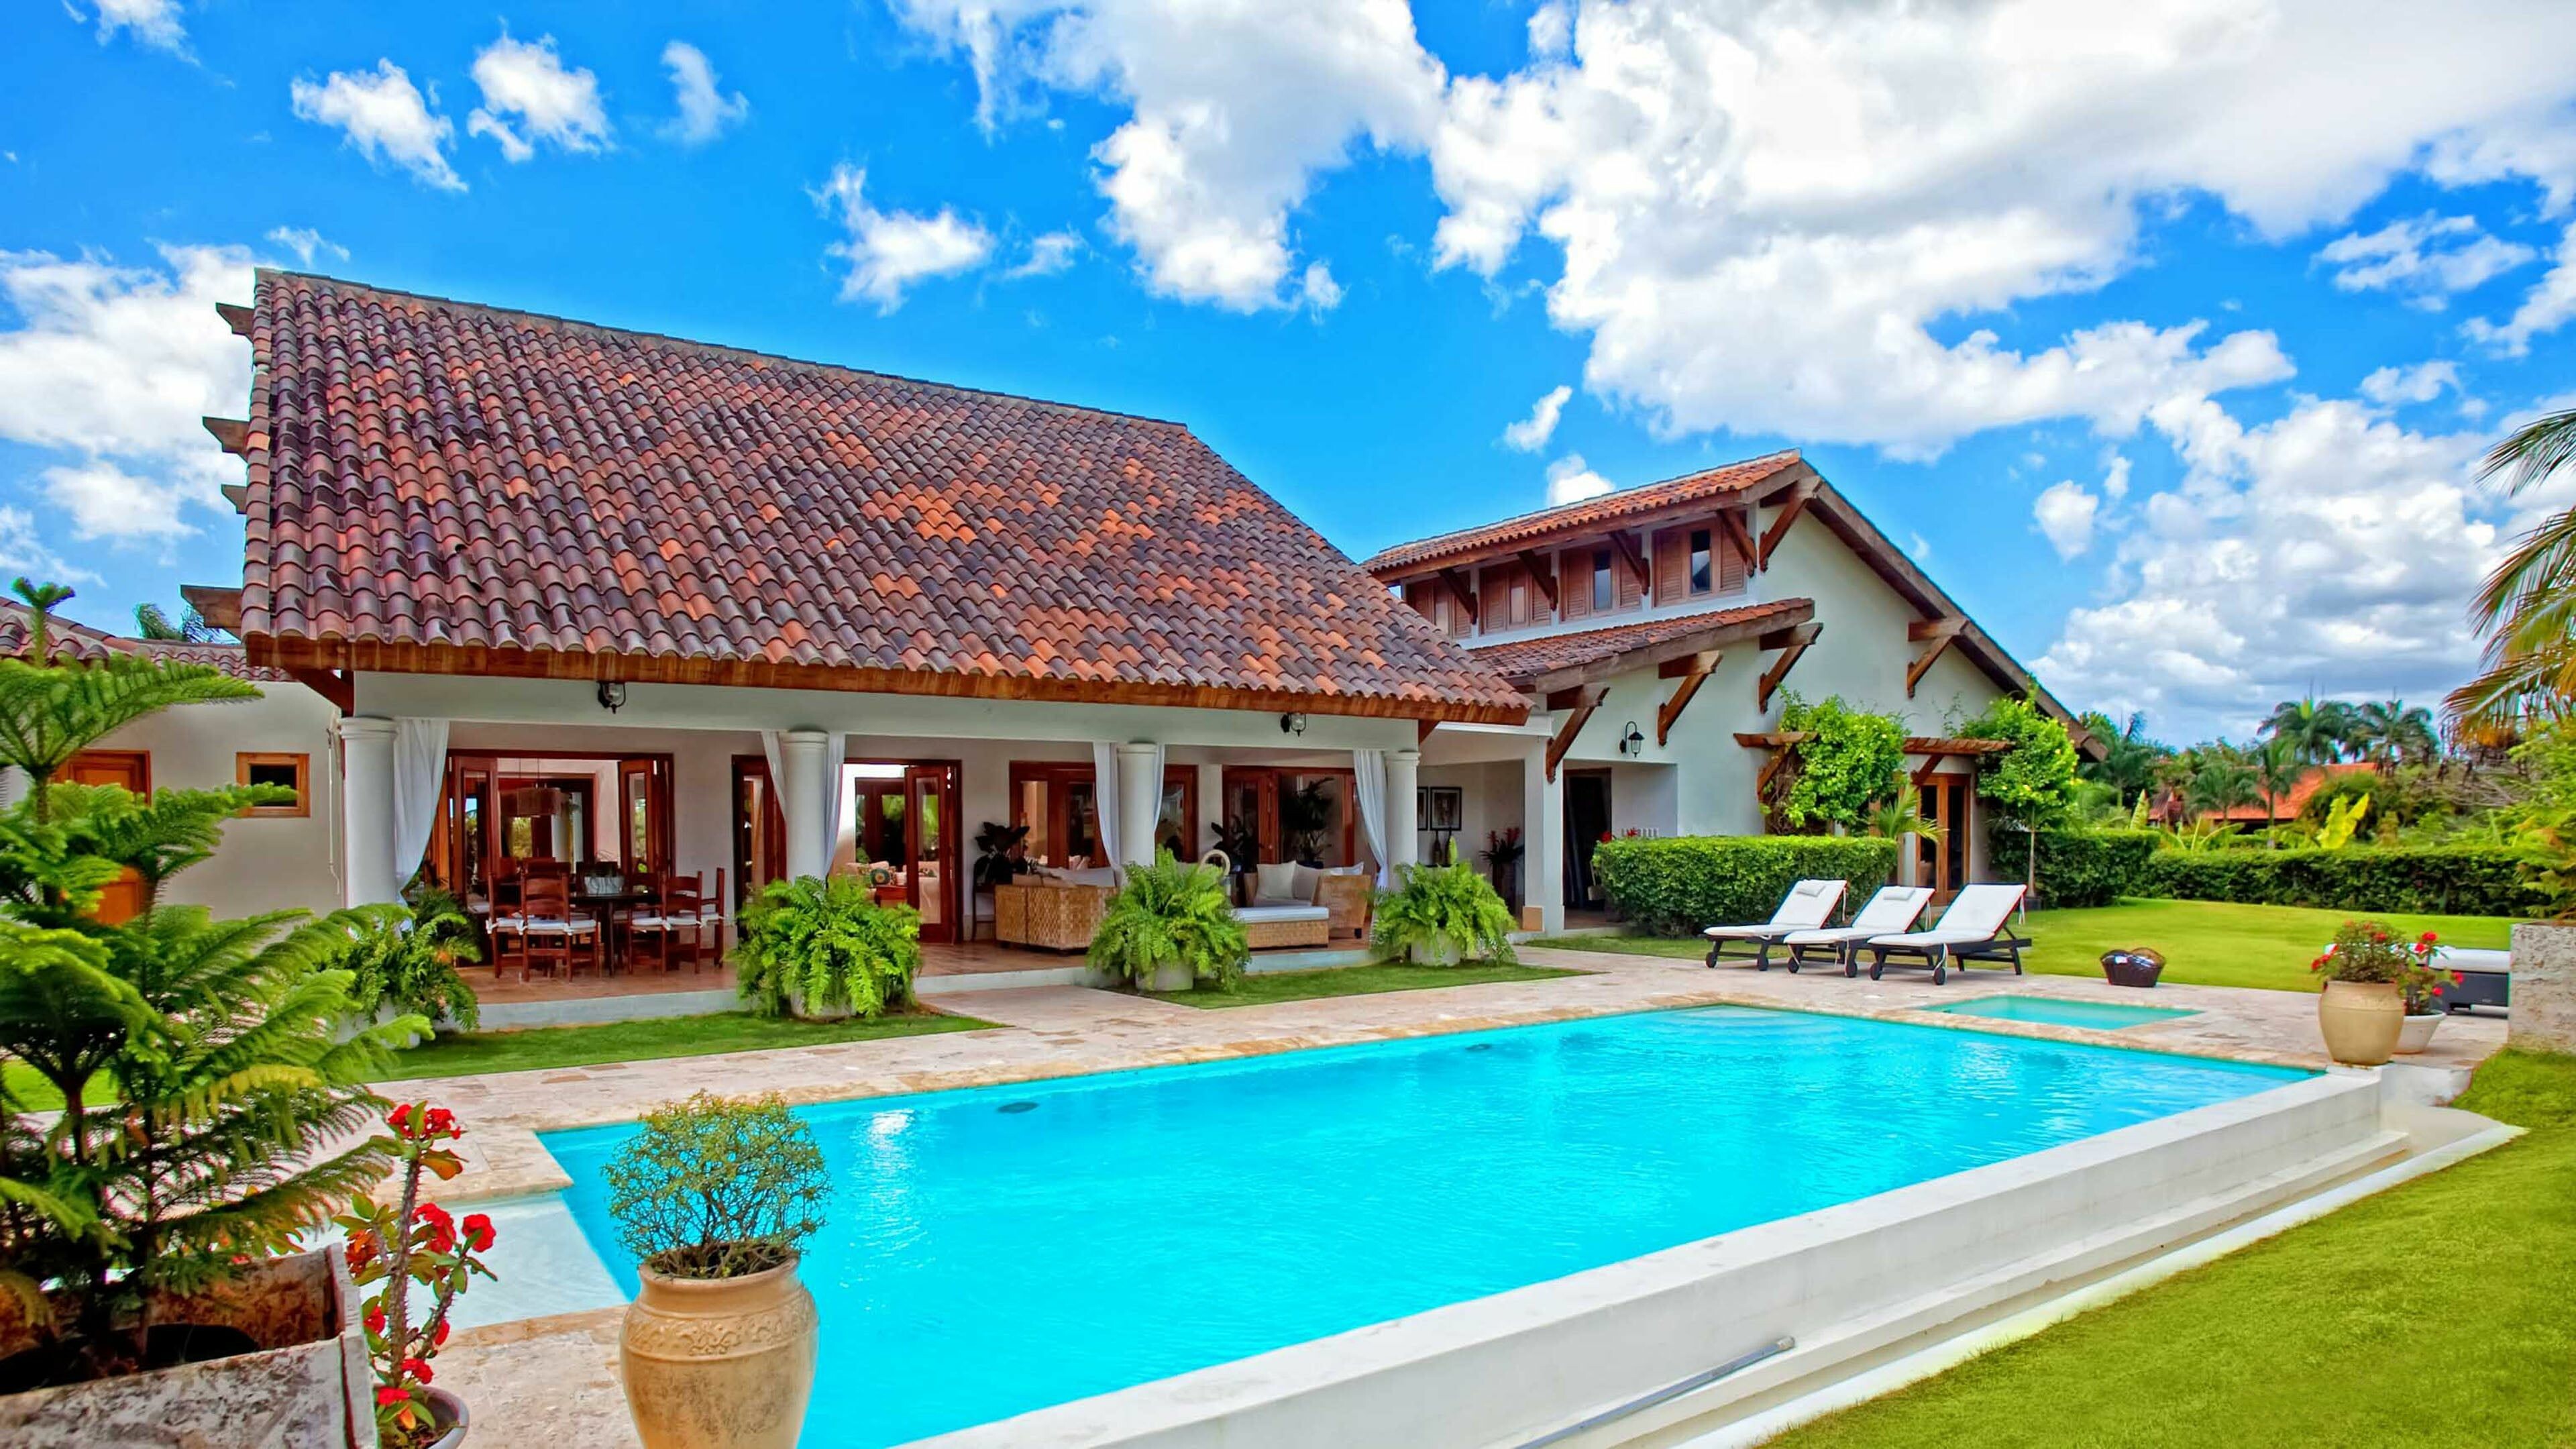 Dominican Republic: La Romana Casa De Campo Resort, The Caribbean region. 3840x2160 4K Wallpaper.